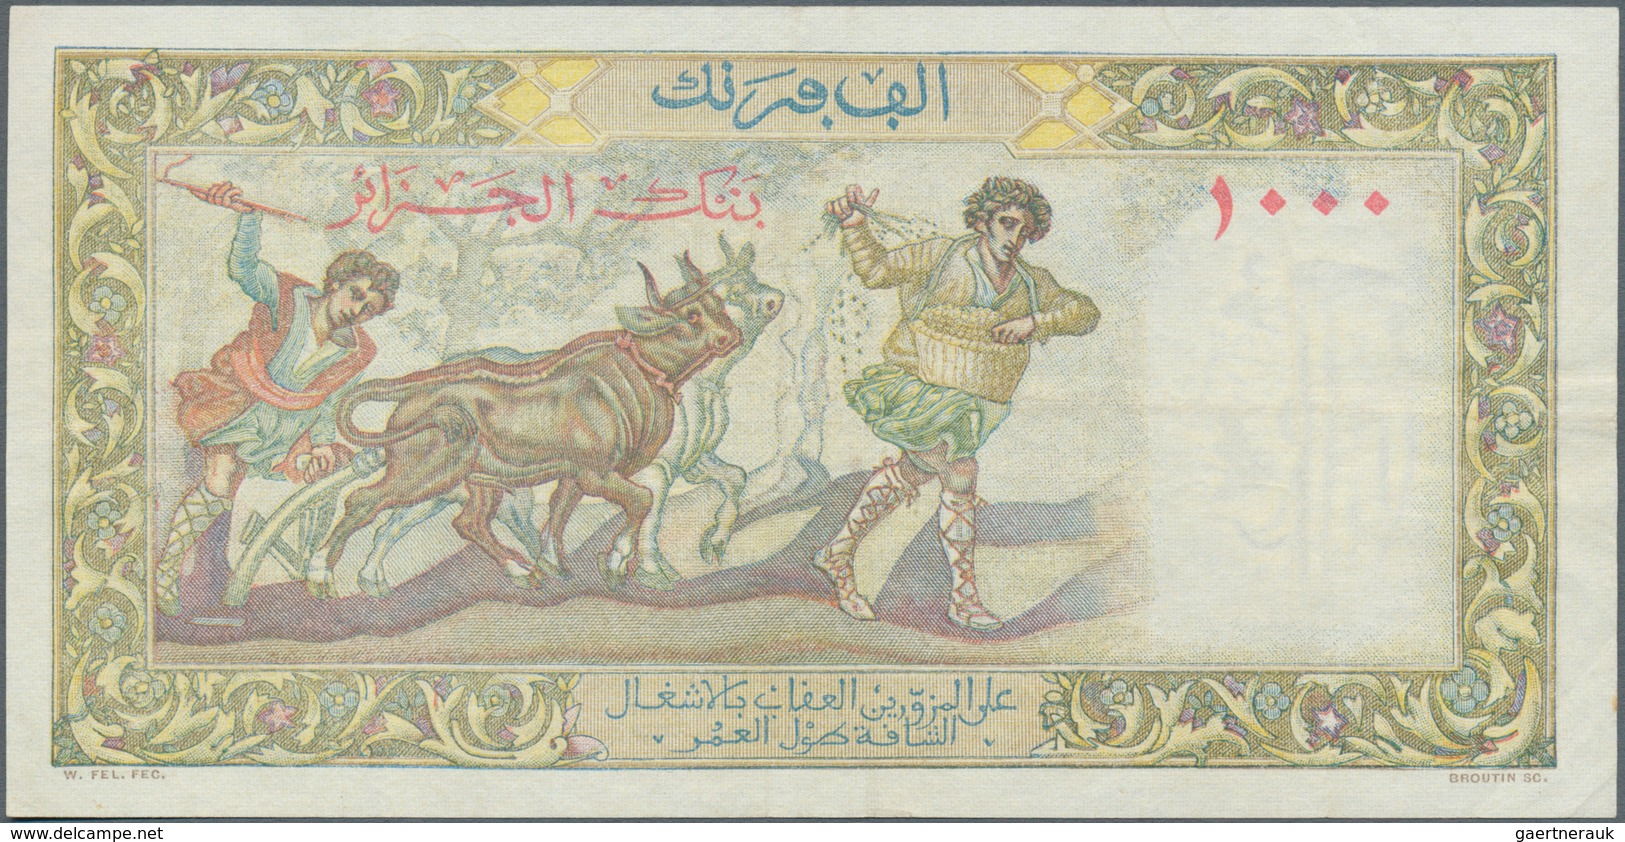 01009 Algeria / Algerien: 1000 Francs 1947 P. 104, Light Folds In Paper, No Holes, Still Nice Colors And S - Algerien